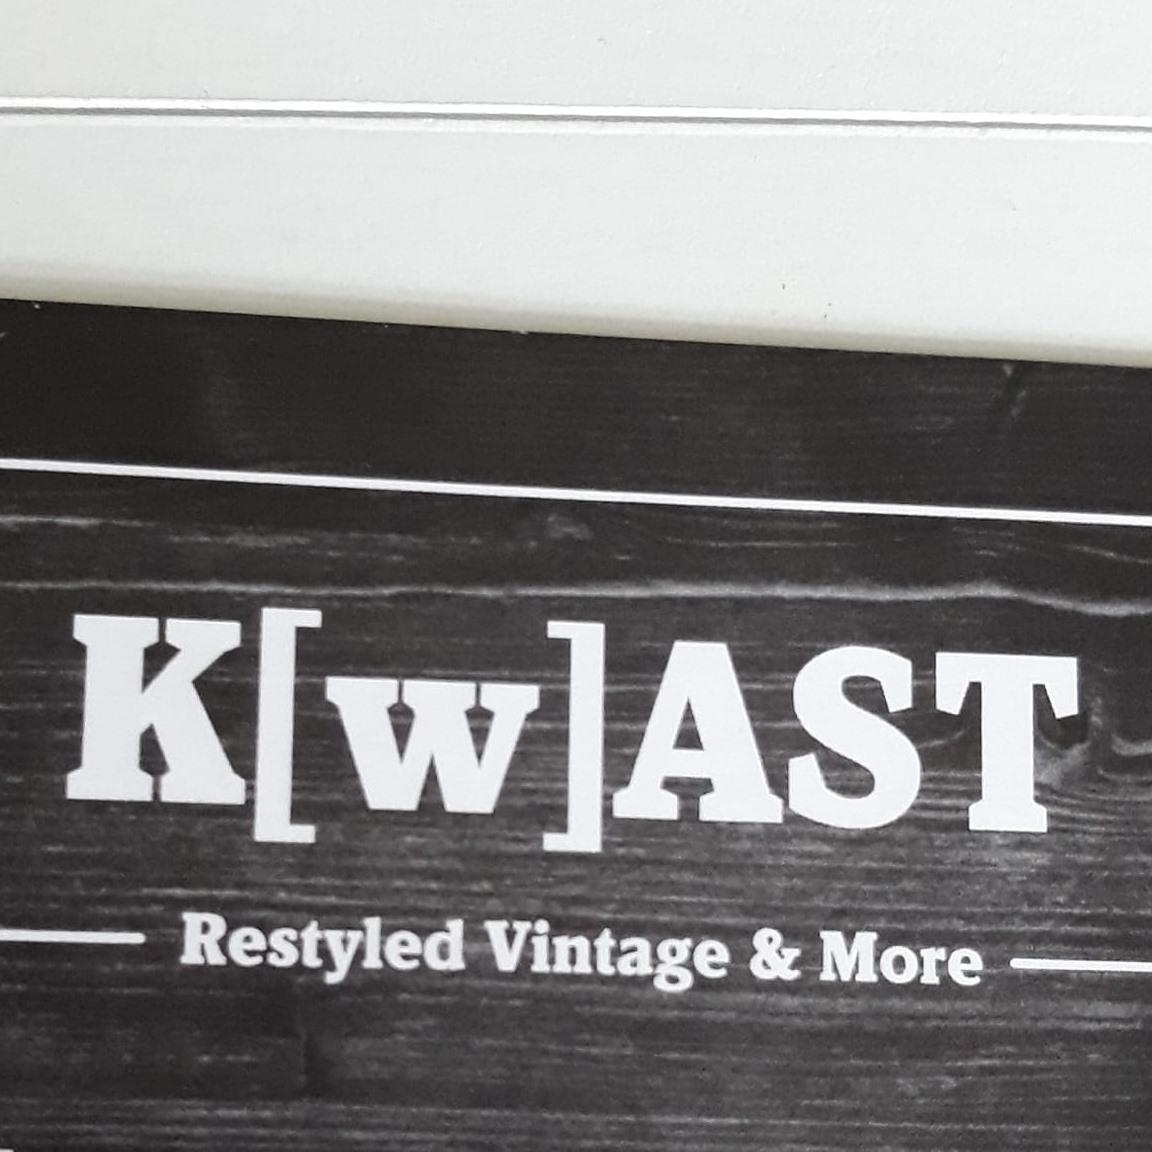 K[w]ast, restyled, vintage & more